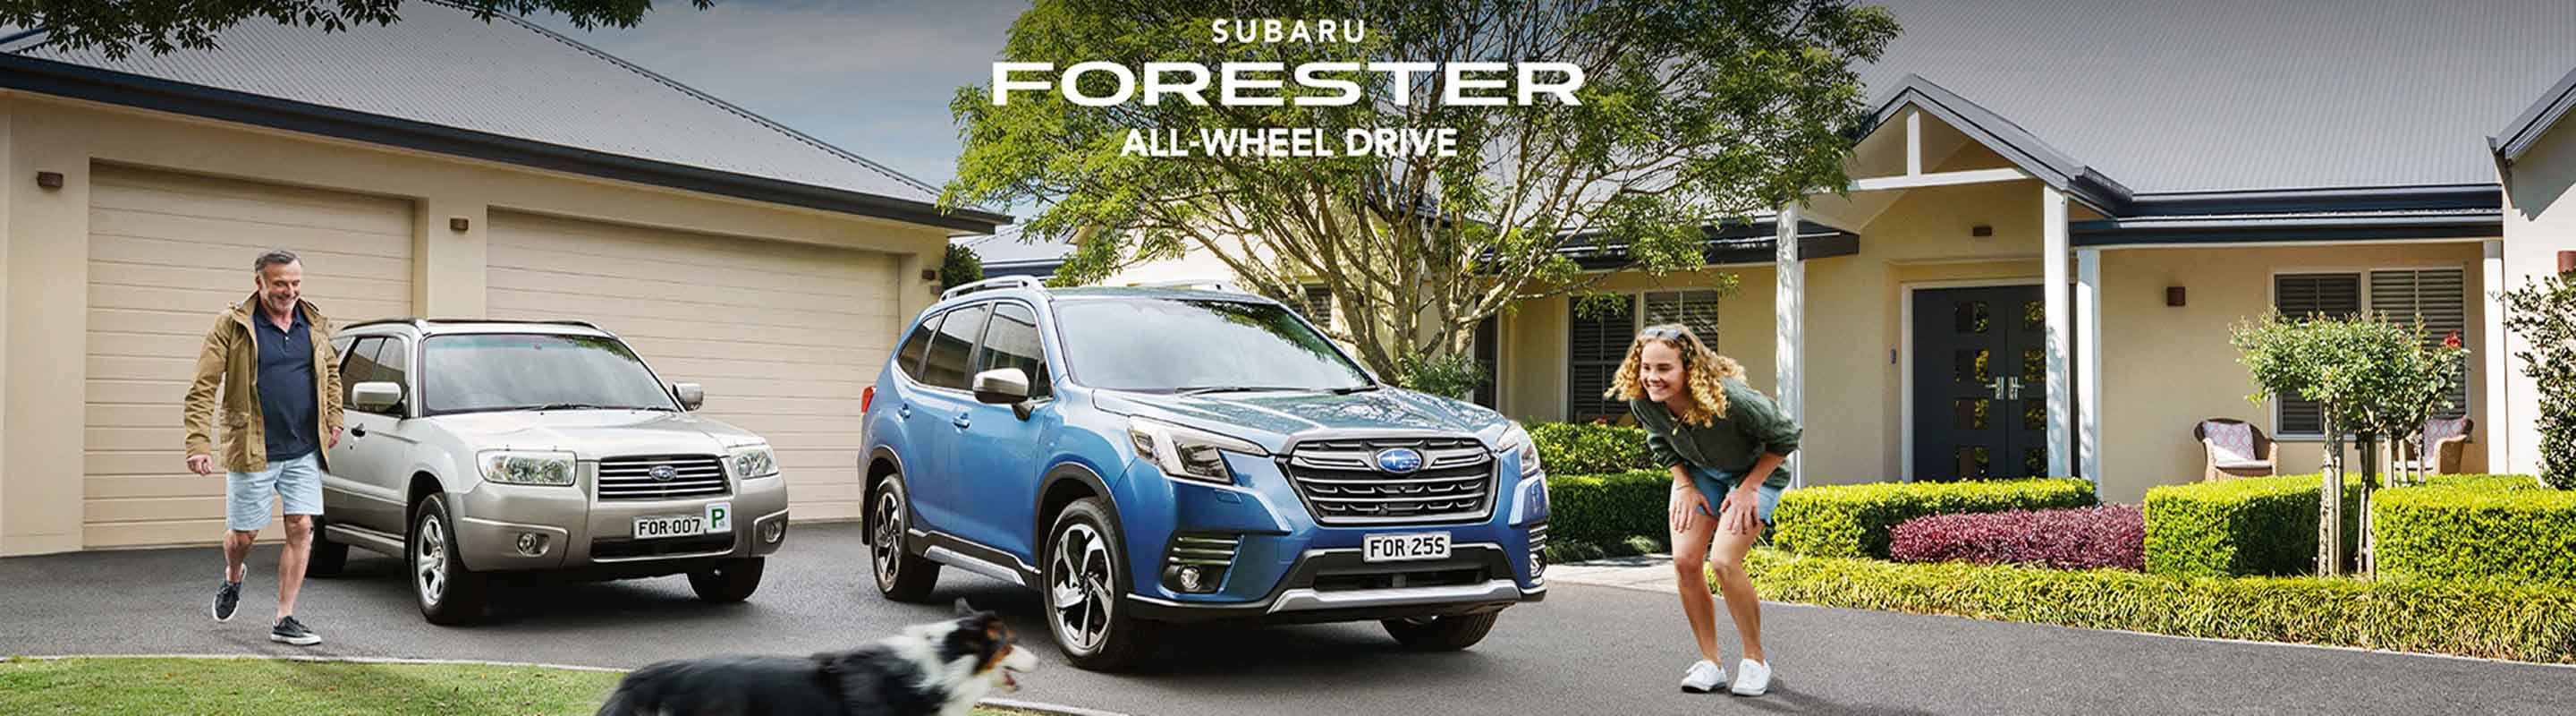 Subaru Australia celebrates 300,000 sales of the Forester SUV